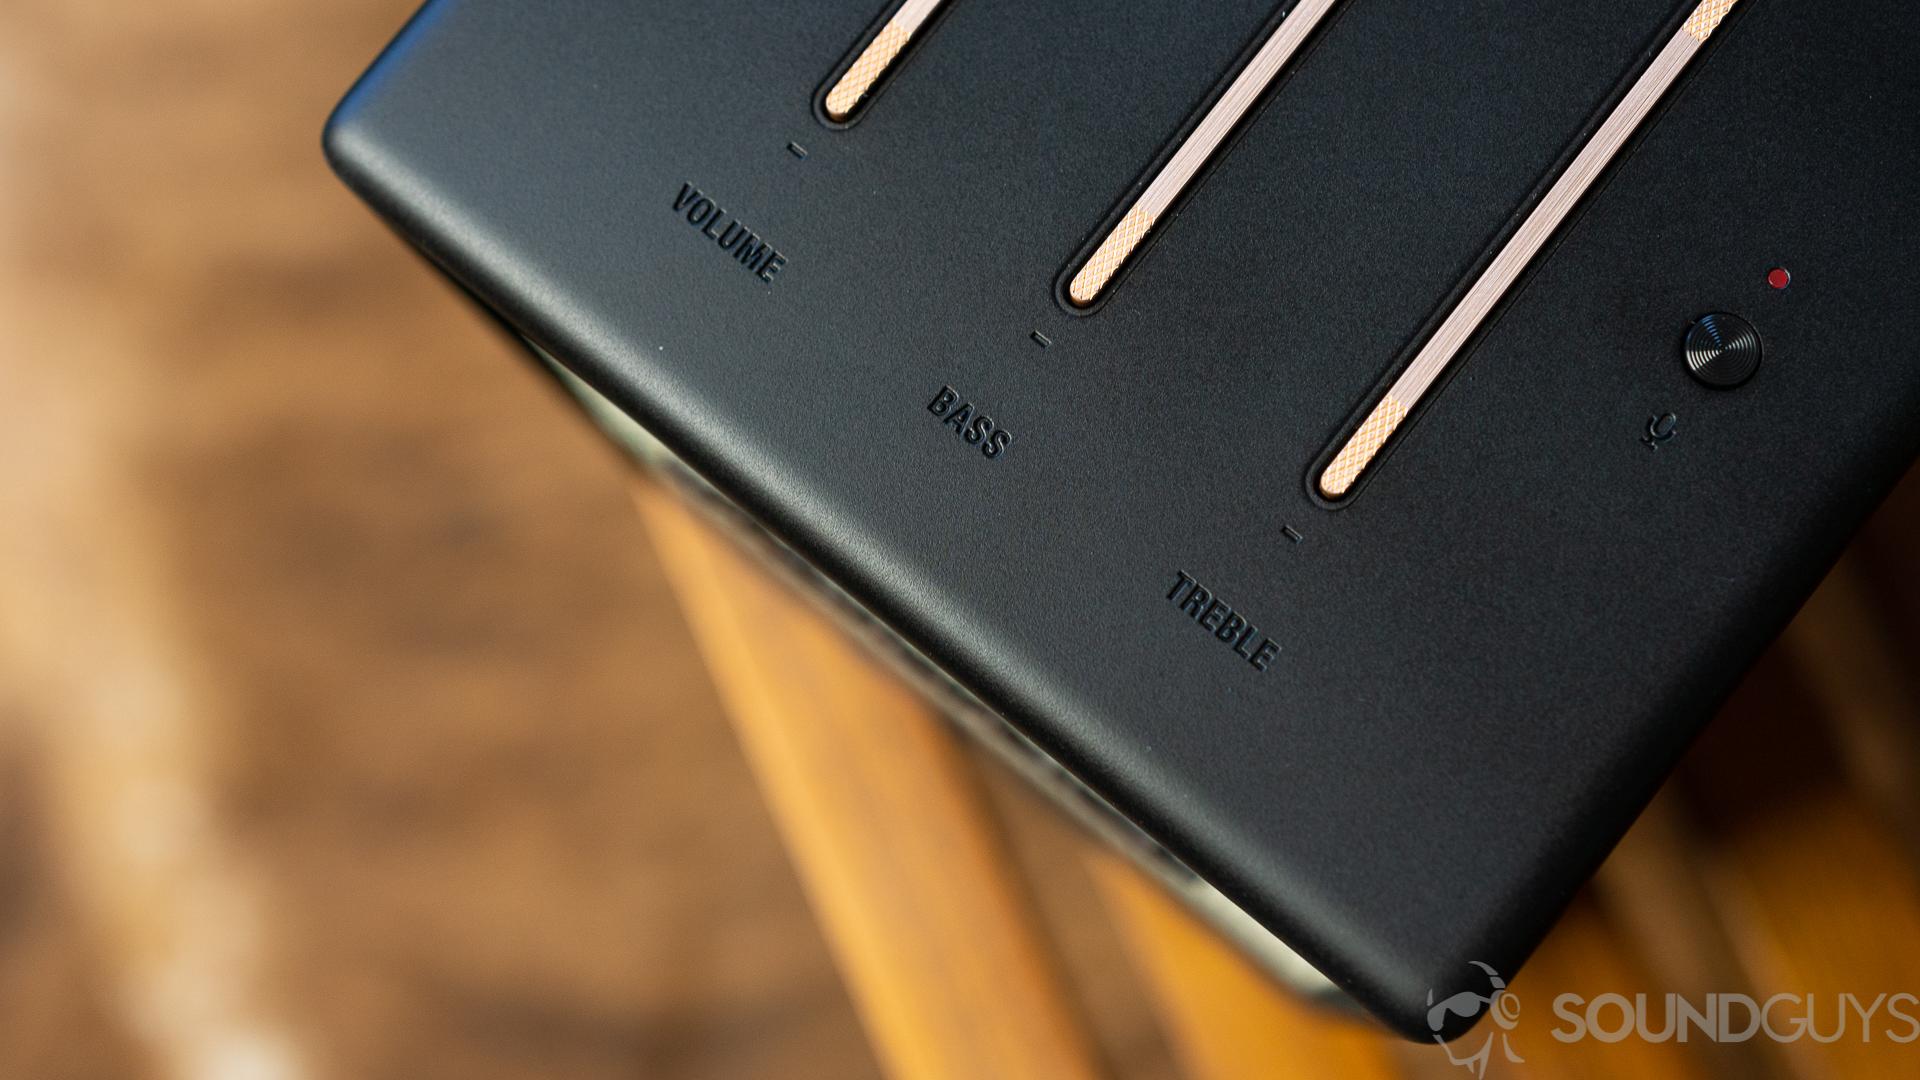 Marshall Uxbridge Smart Speaker with  Alexa Black 1005605 - Best Buy